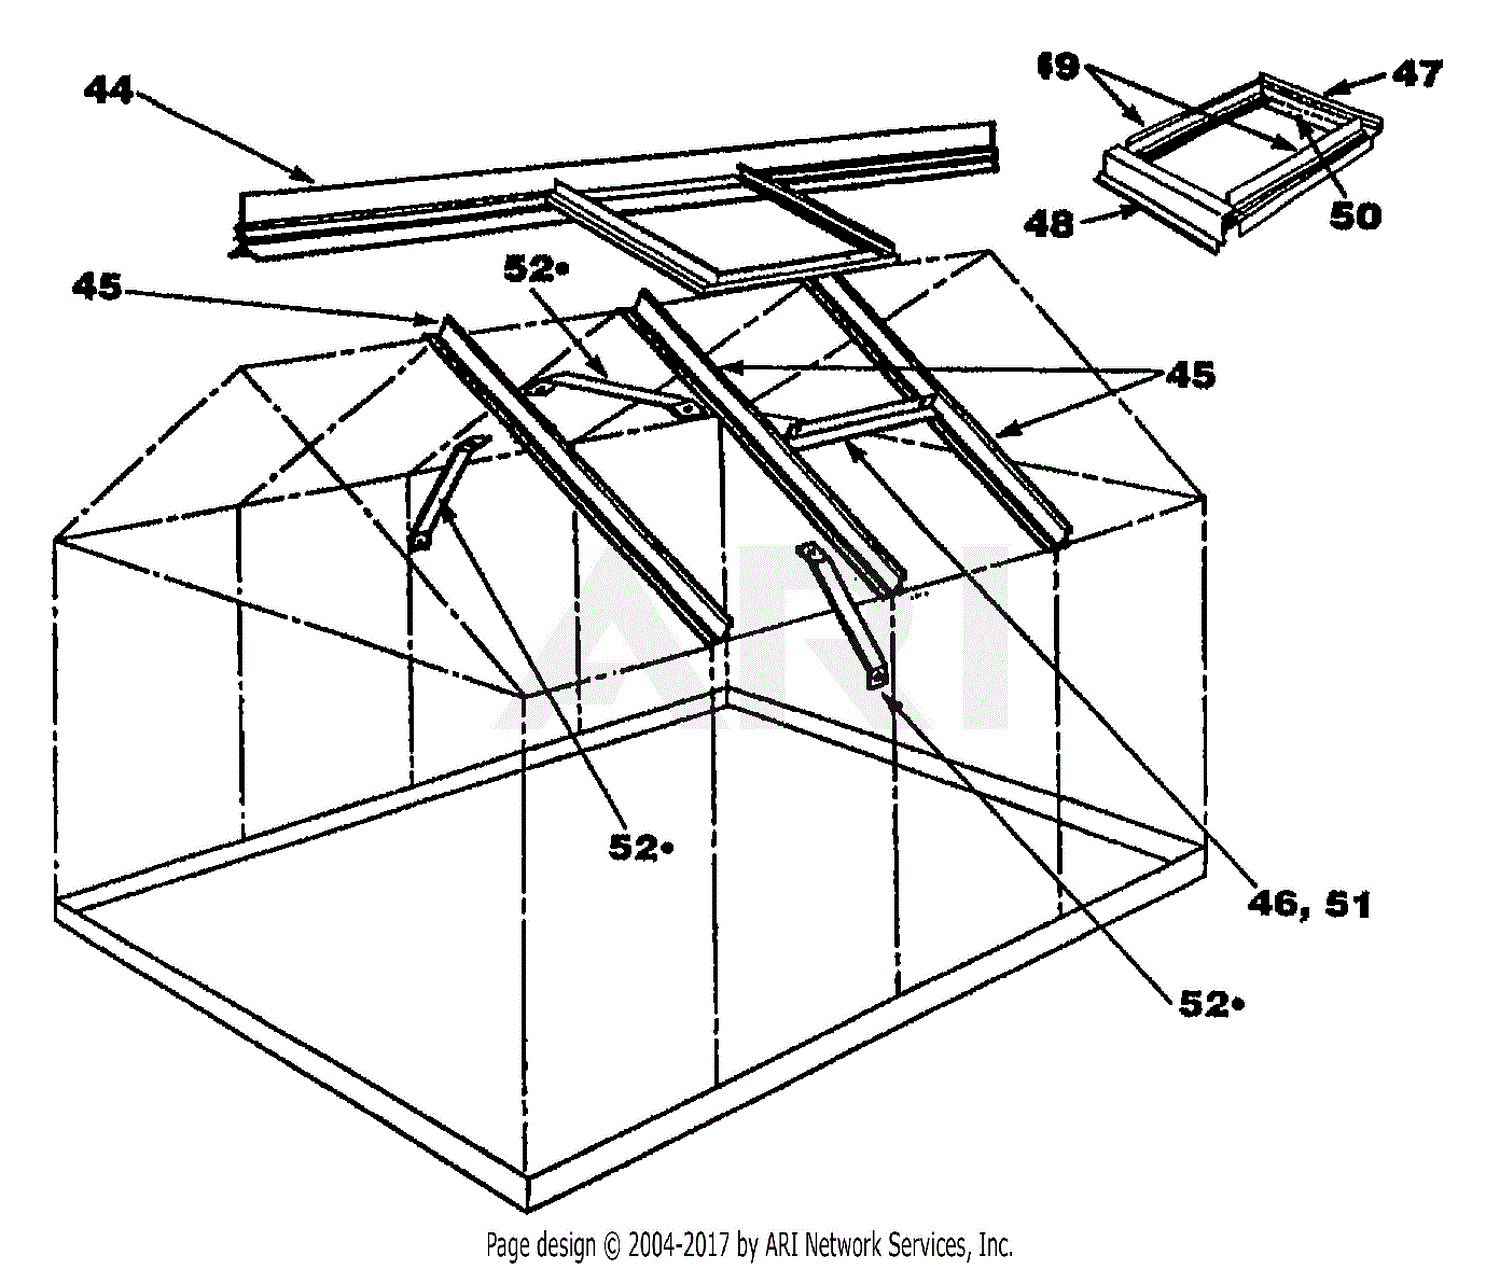 [DIAGRAM] Solar Roof Shingles Diagram - MYDIAGRAM.ONLINE